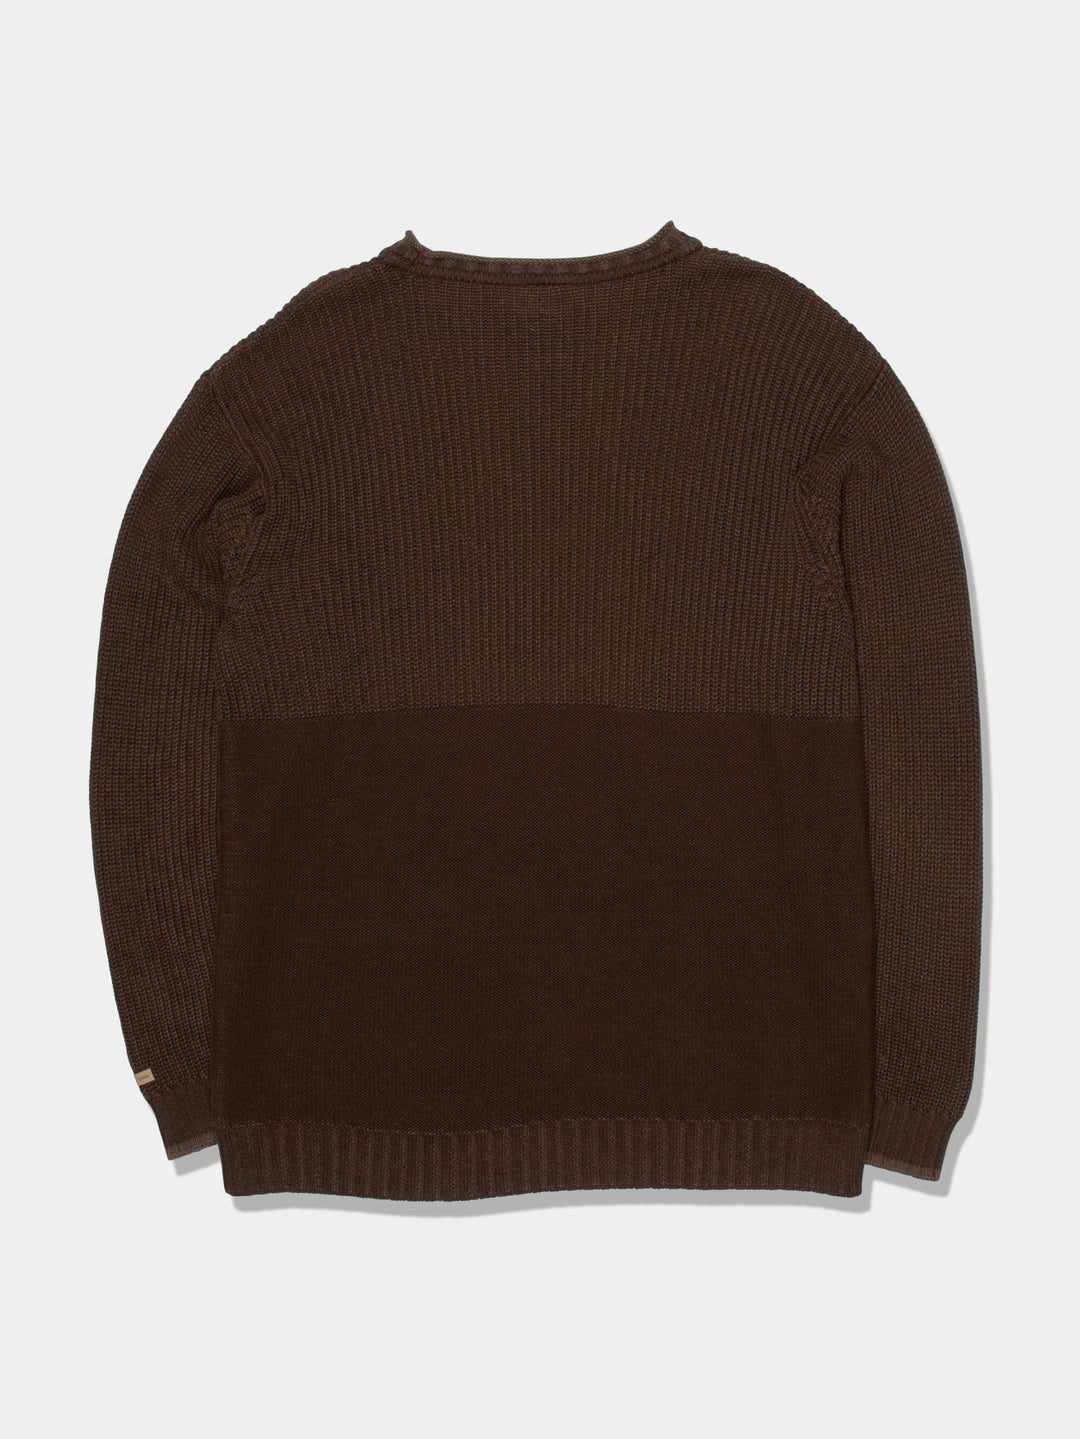 Vintage Columbia Brown Sweater (XL)